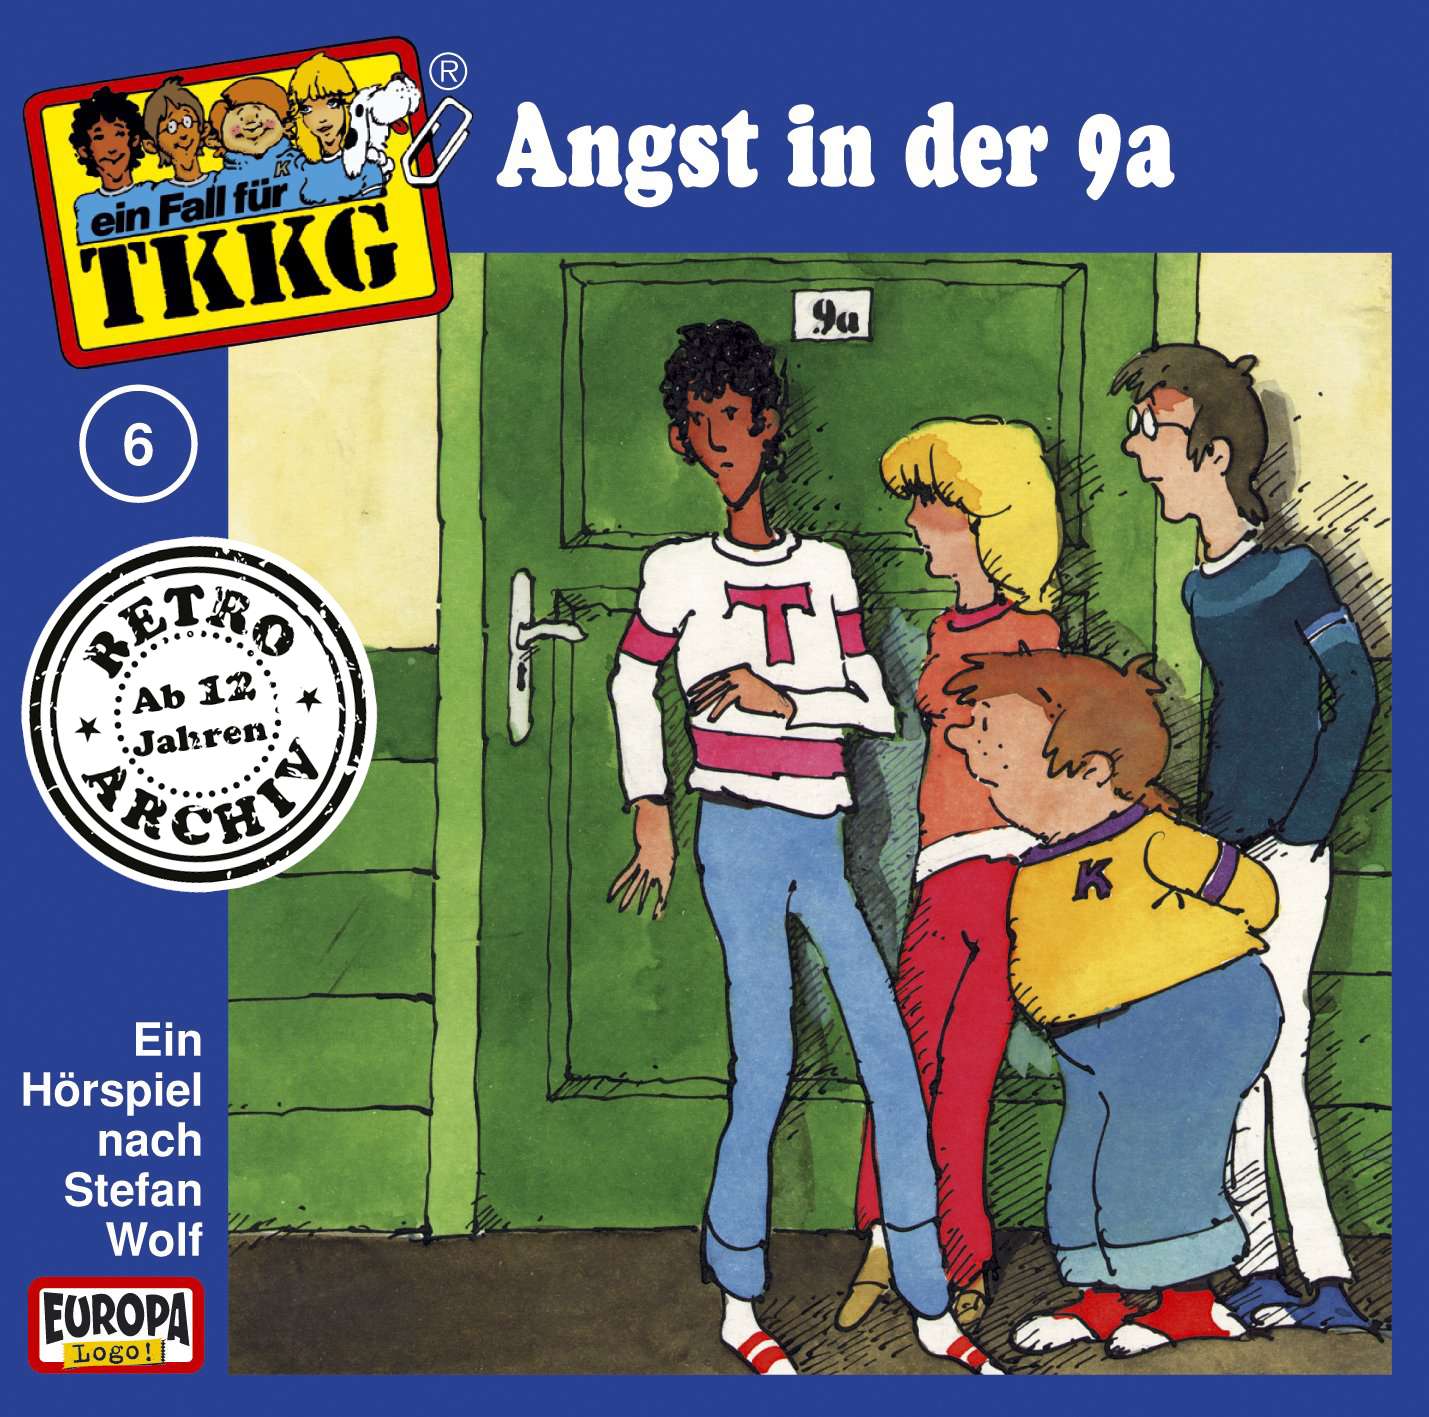 TKKG Retro-Archiv: Angst in der 9a